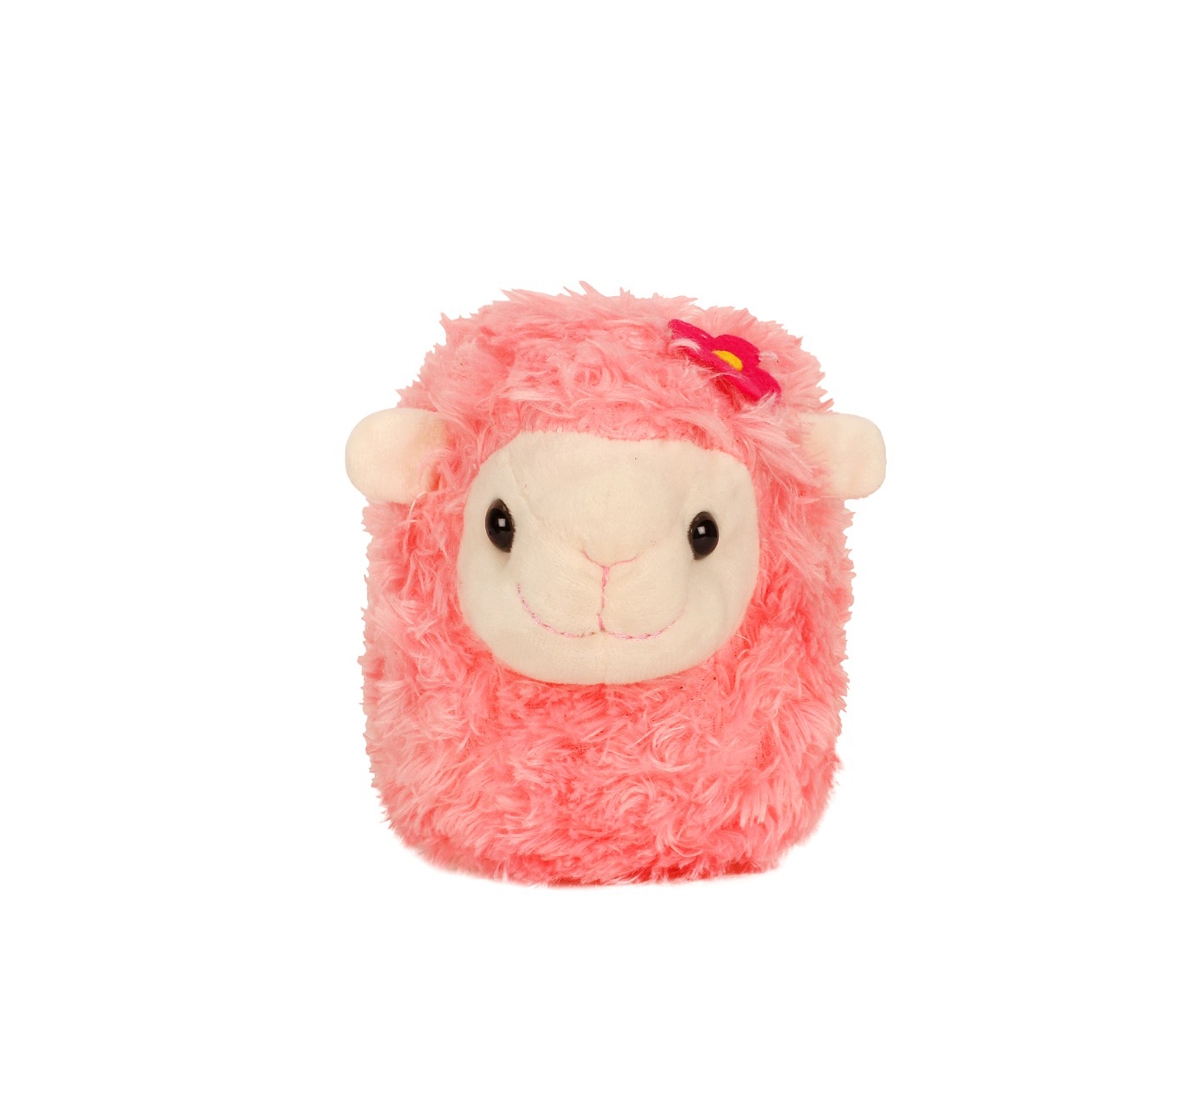 Fuzzbuzz | Fuzzbuzz Pink Lamb Stuffed Animal - 28Cm Quirky Soft Toys for Kids age 0M+ - 20 Cm (Pink) 5